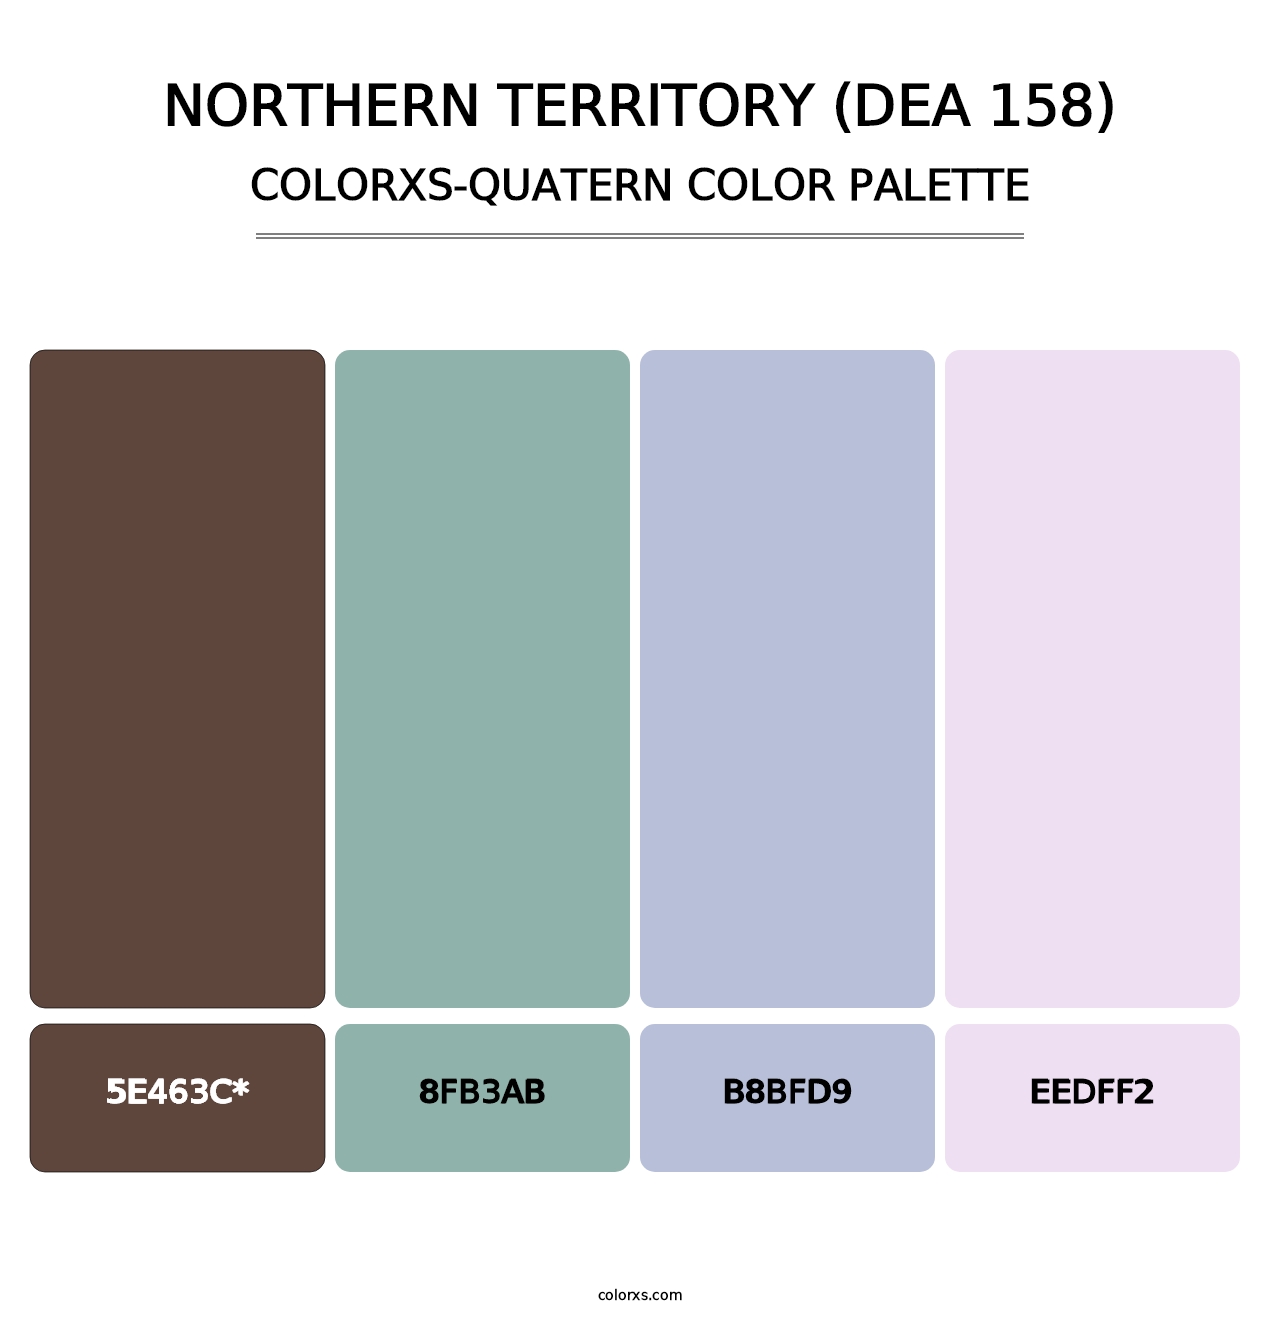 Northern Territory (DEA 158) - Colorxs Quatern Palette